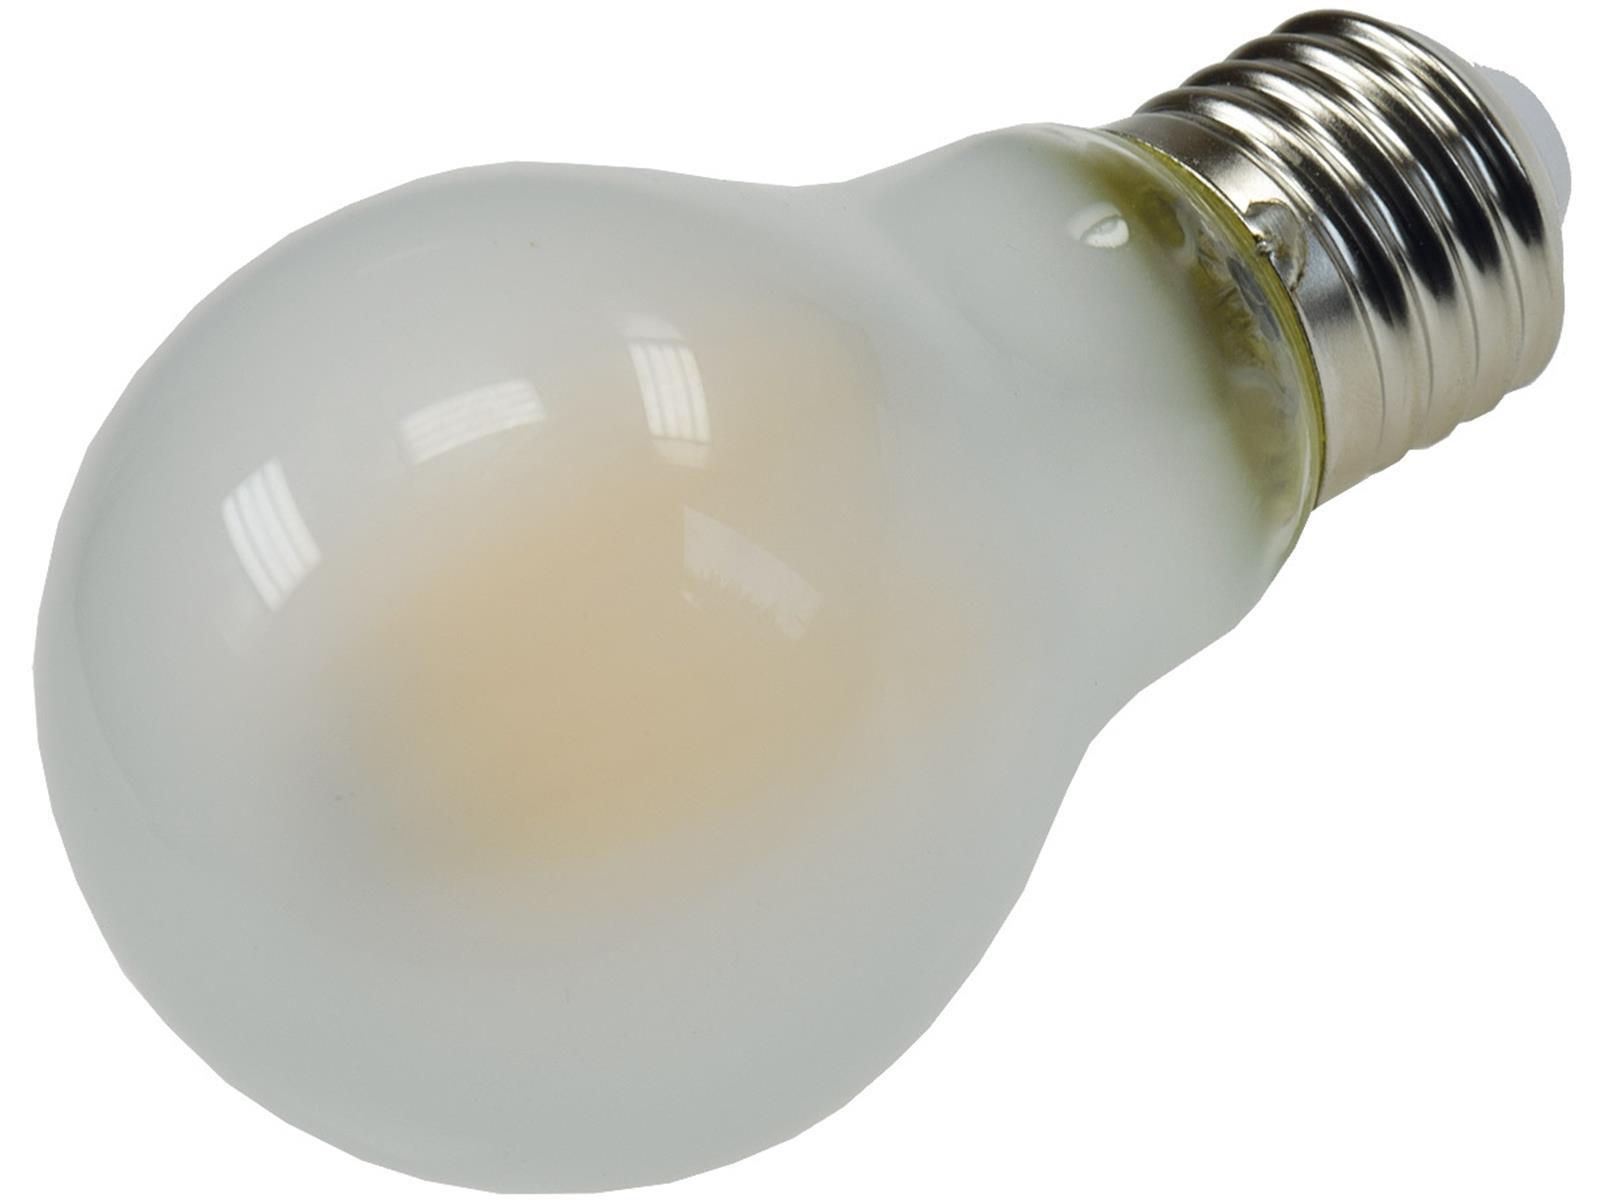 LED Glühlampe E27 "Filament G60m" matt 3000k, 640lm, 230V / 8W, warmweiß